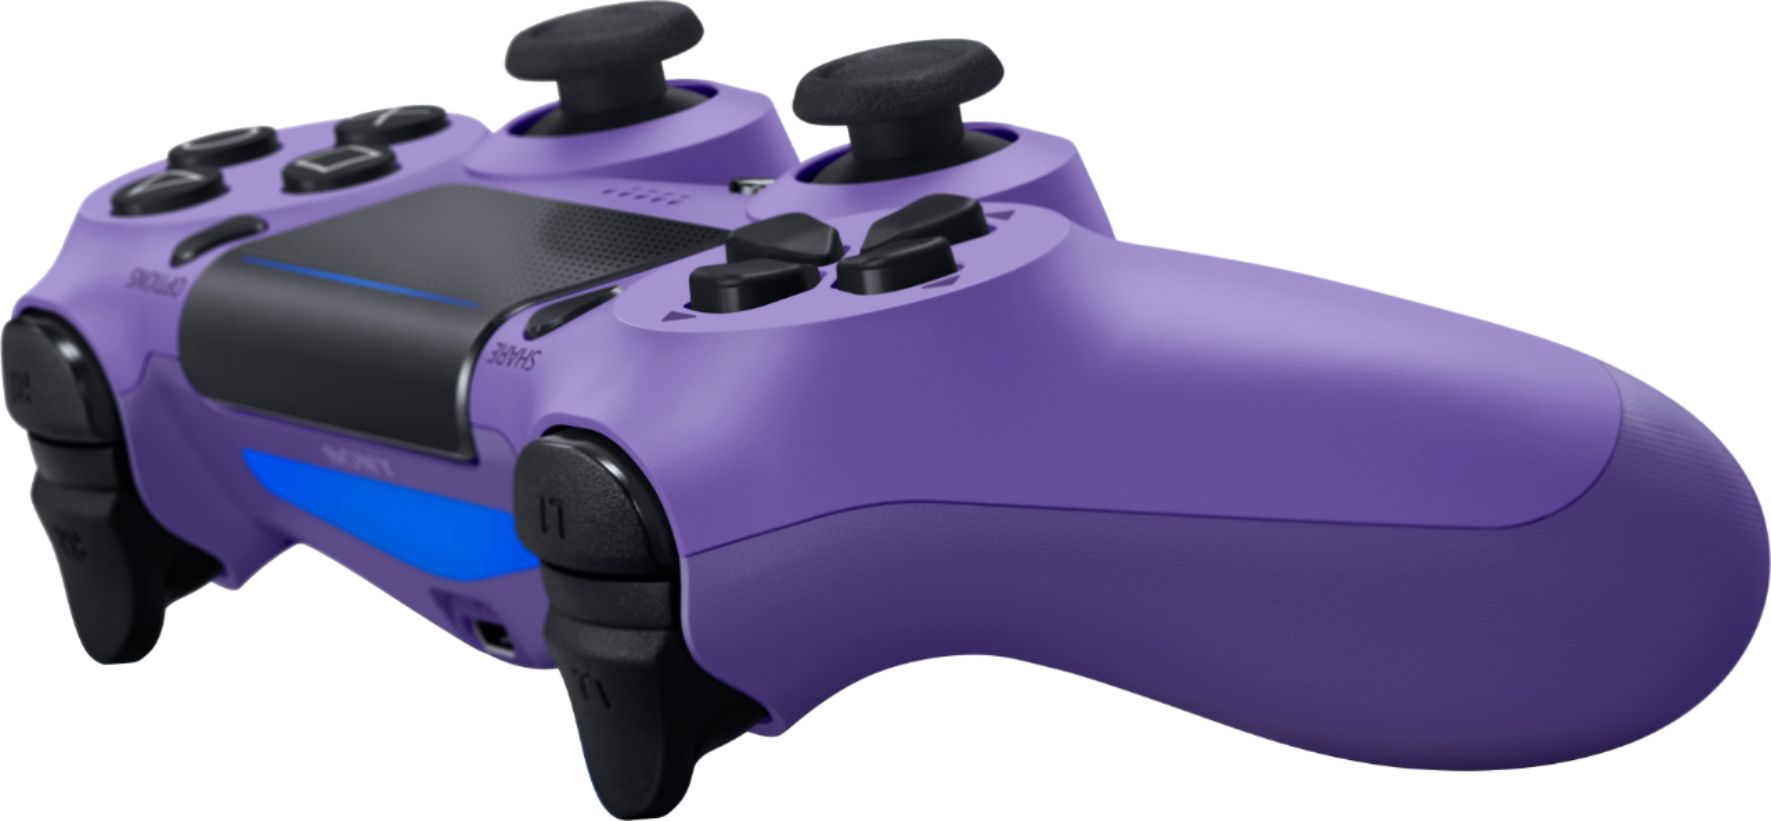 dualshock 4 purple controller